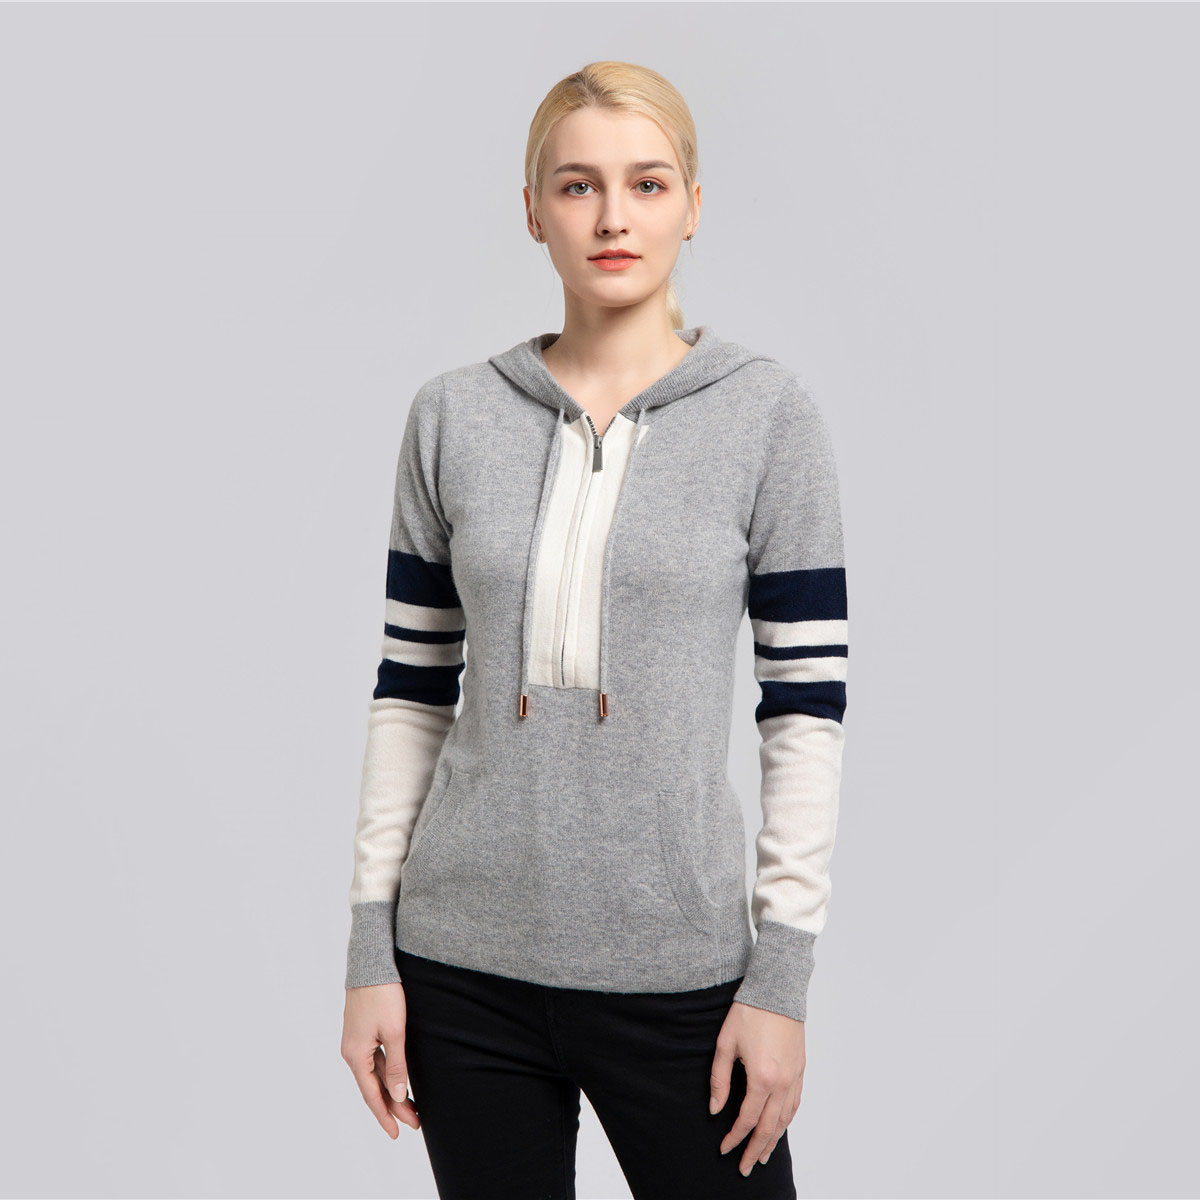 women's pure cashmere sweater fashion style